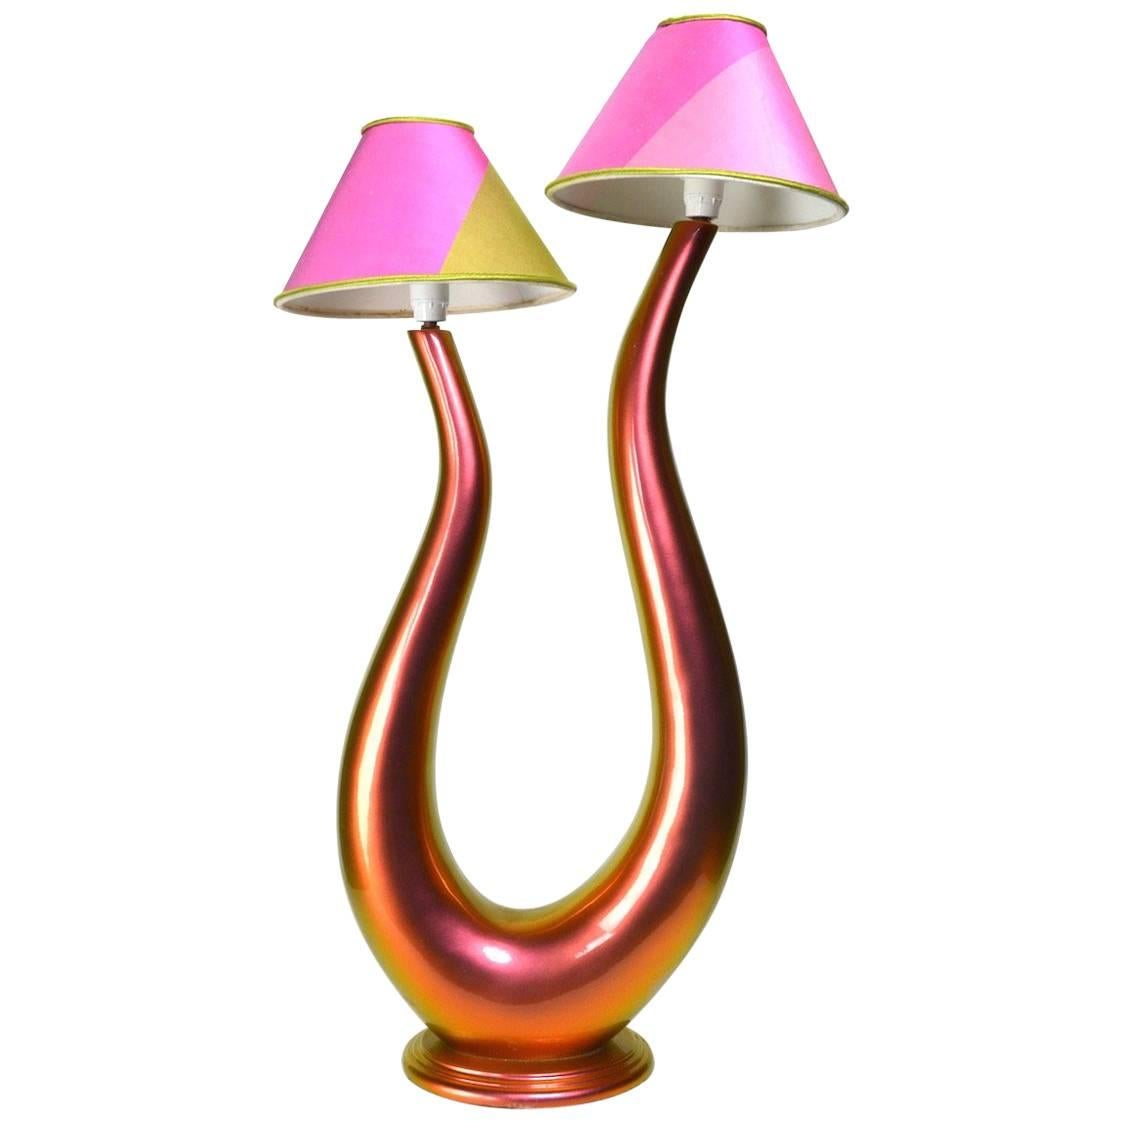 Sculptural Organic Post Modern Ceramic Lamp Made in Italy